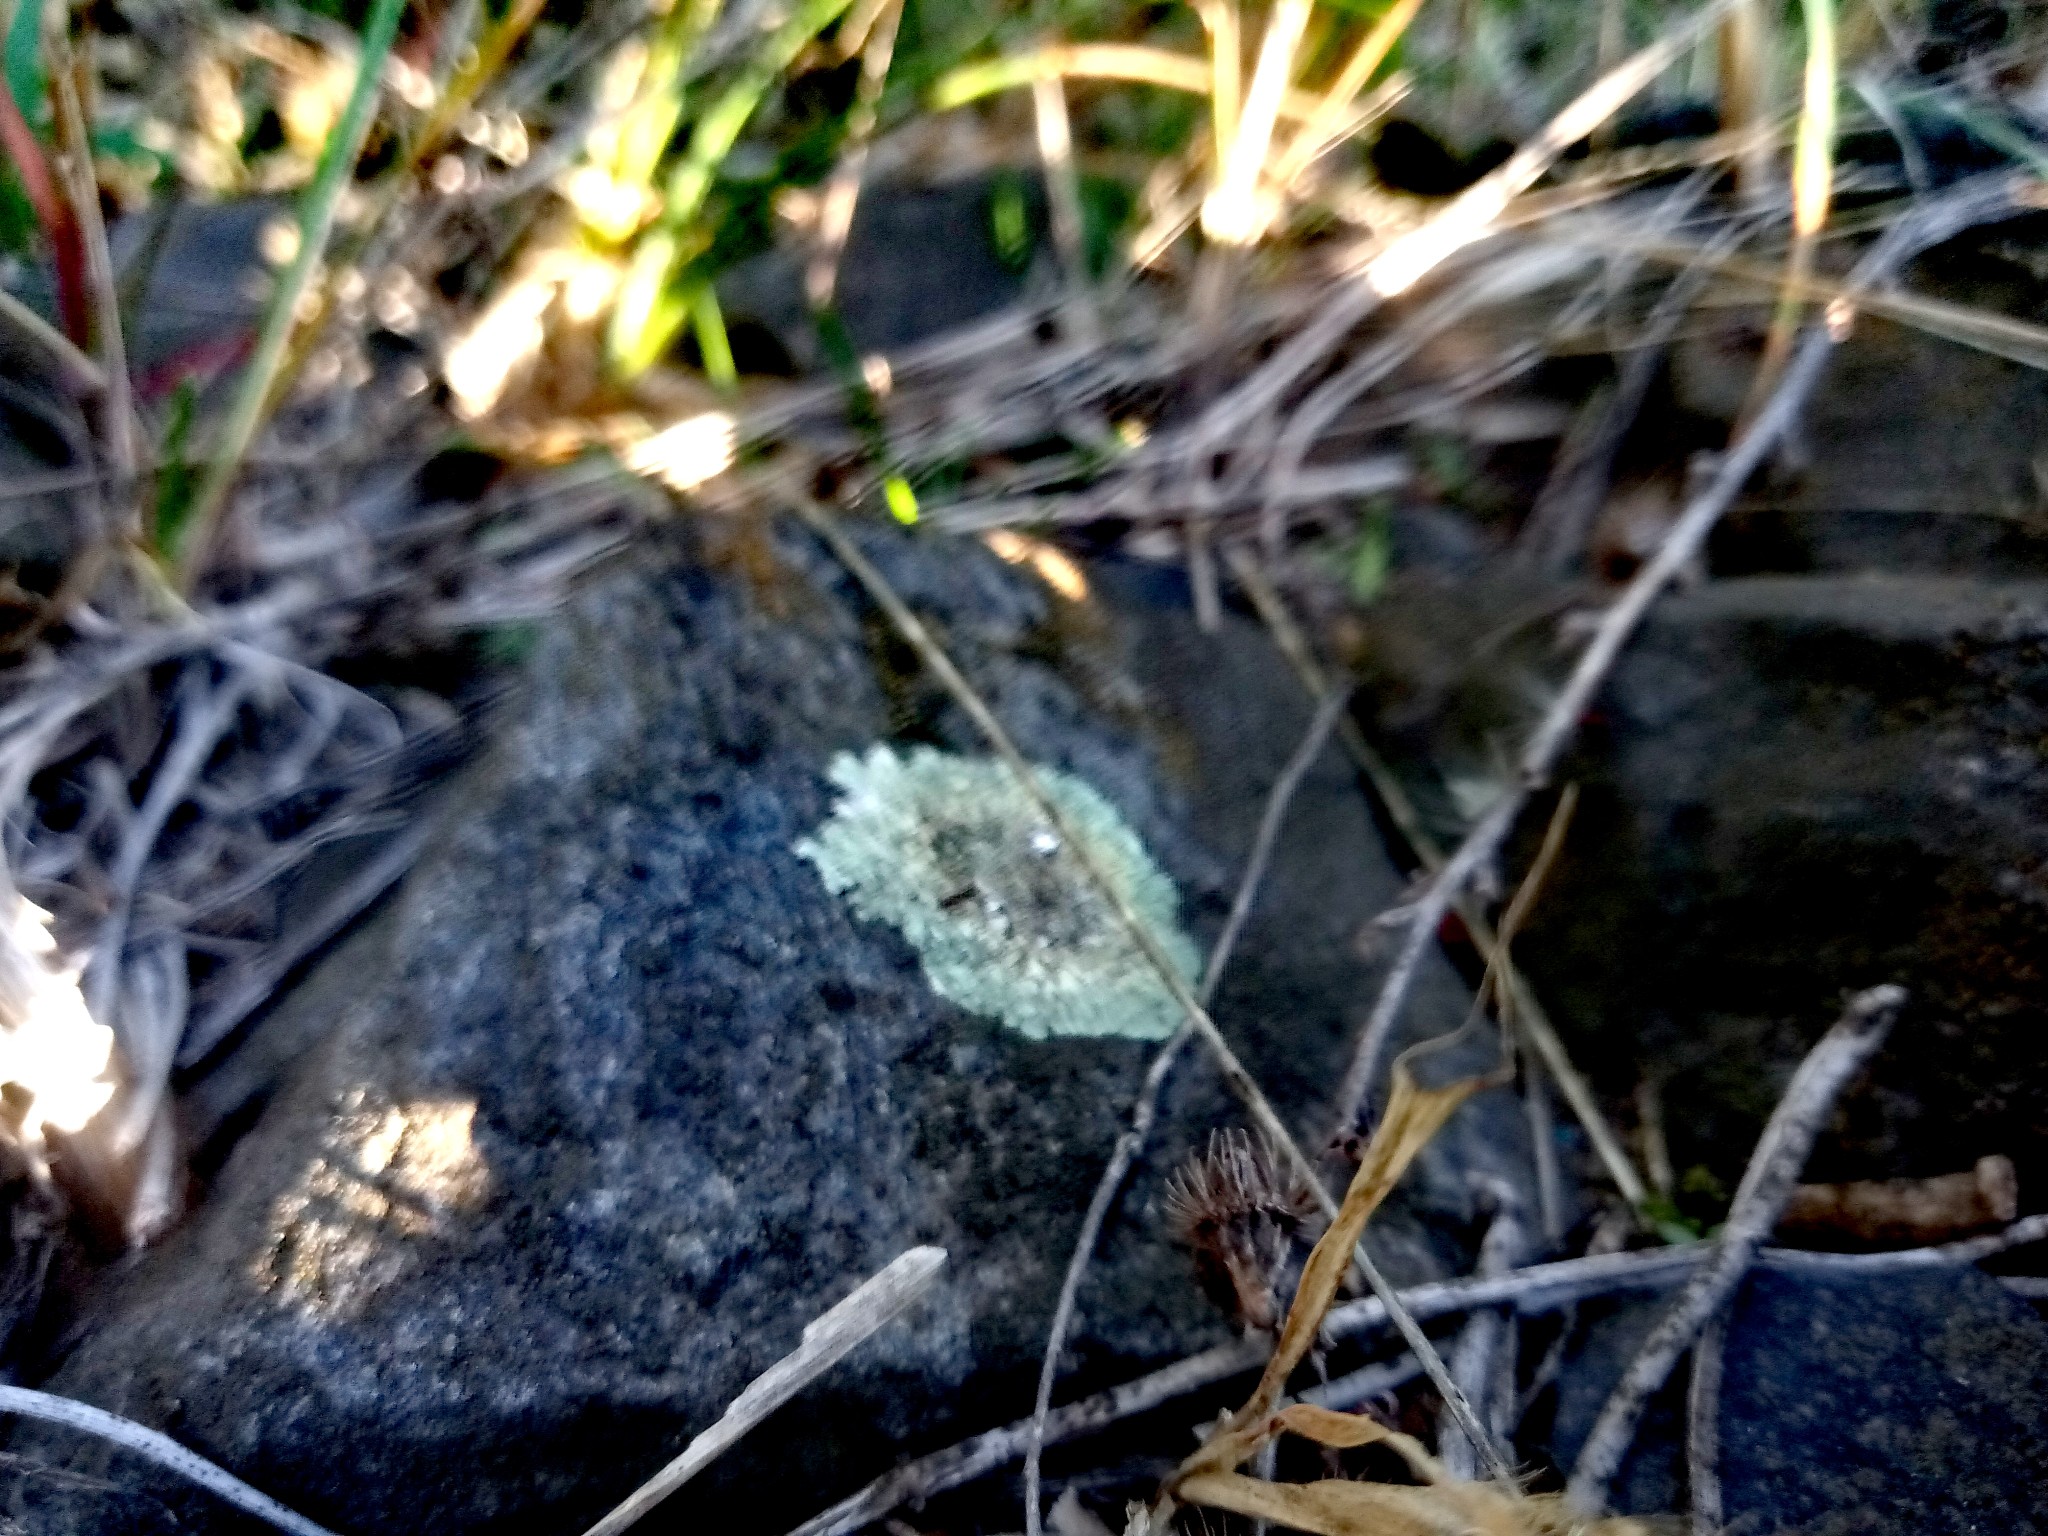 lichens on stones photo 7